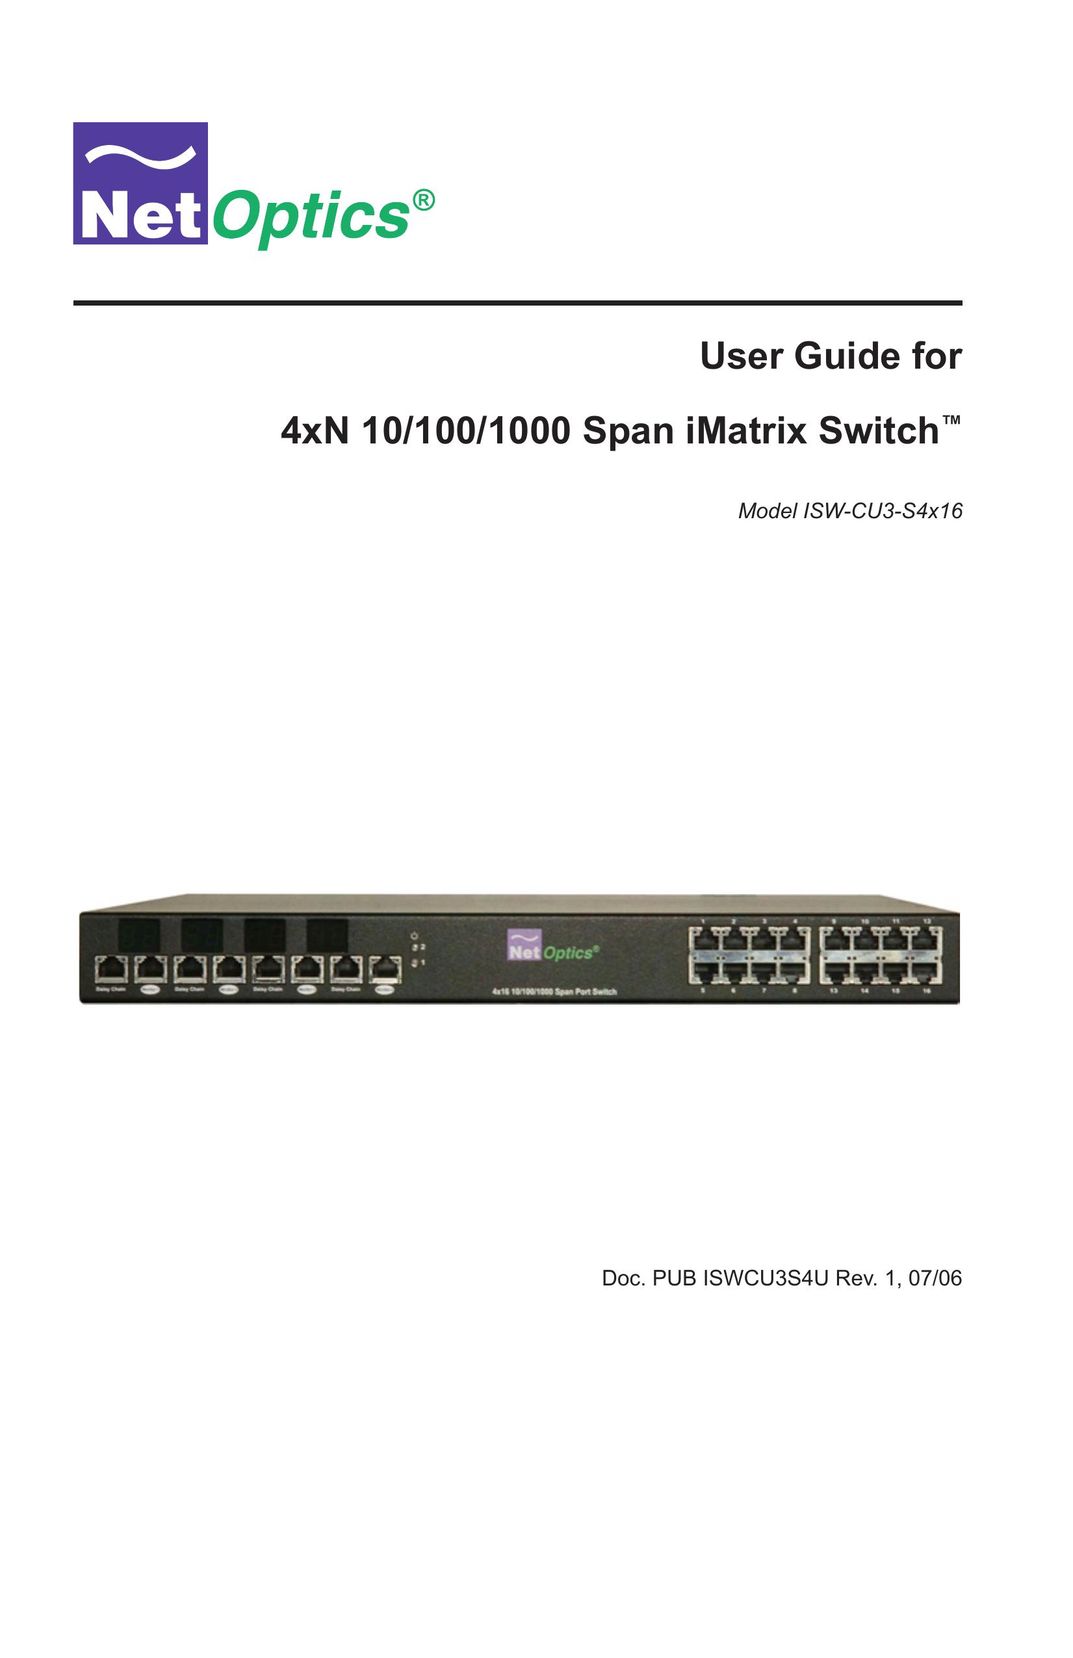 Net Optics 4xN 10 Switch User Manual